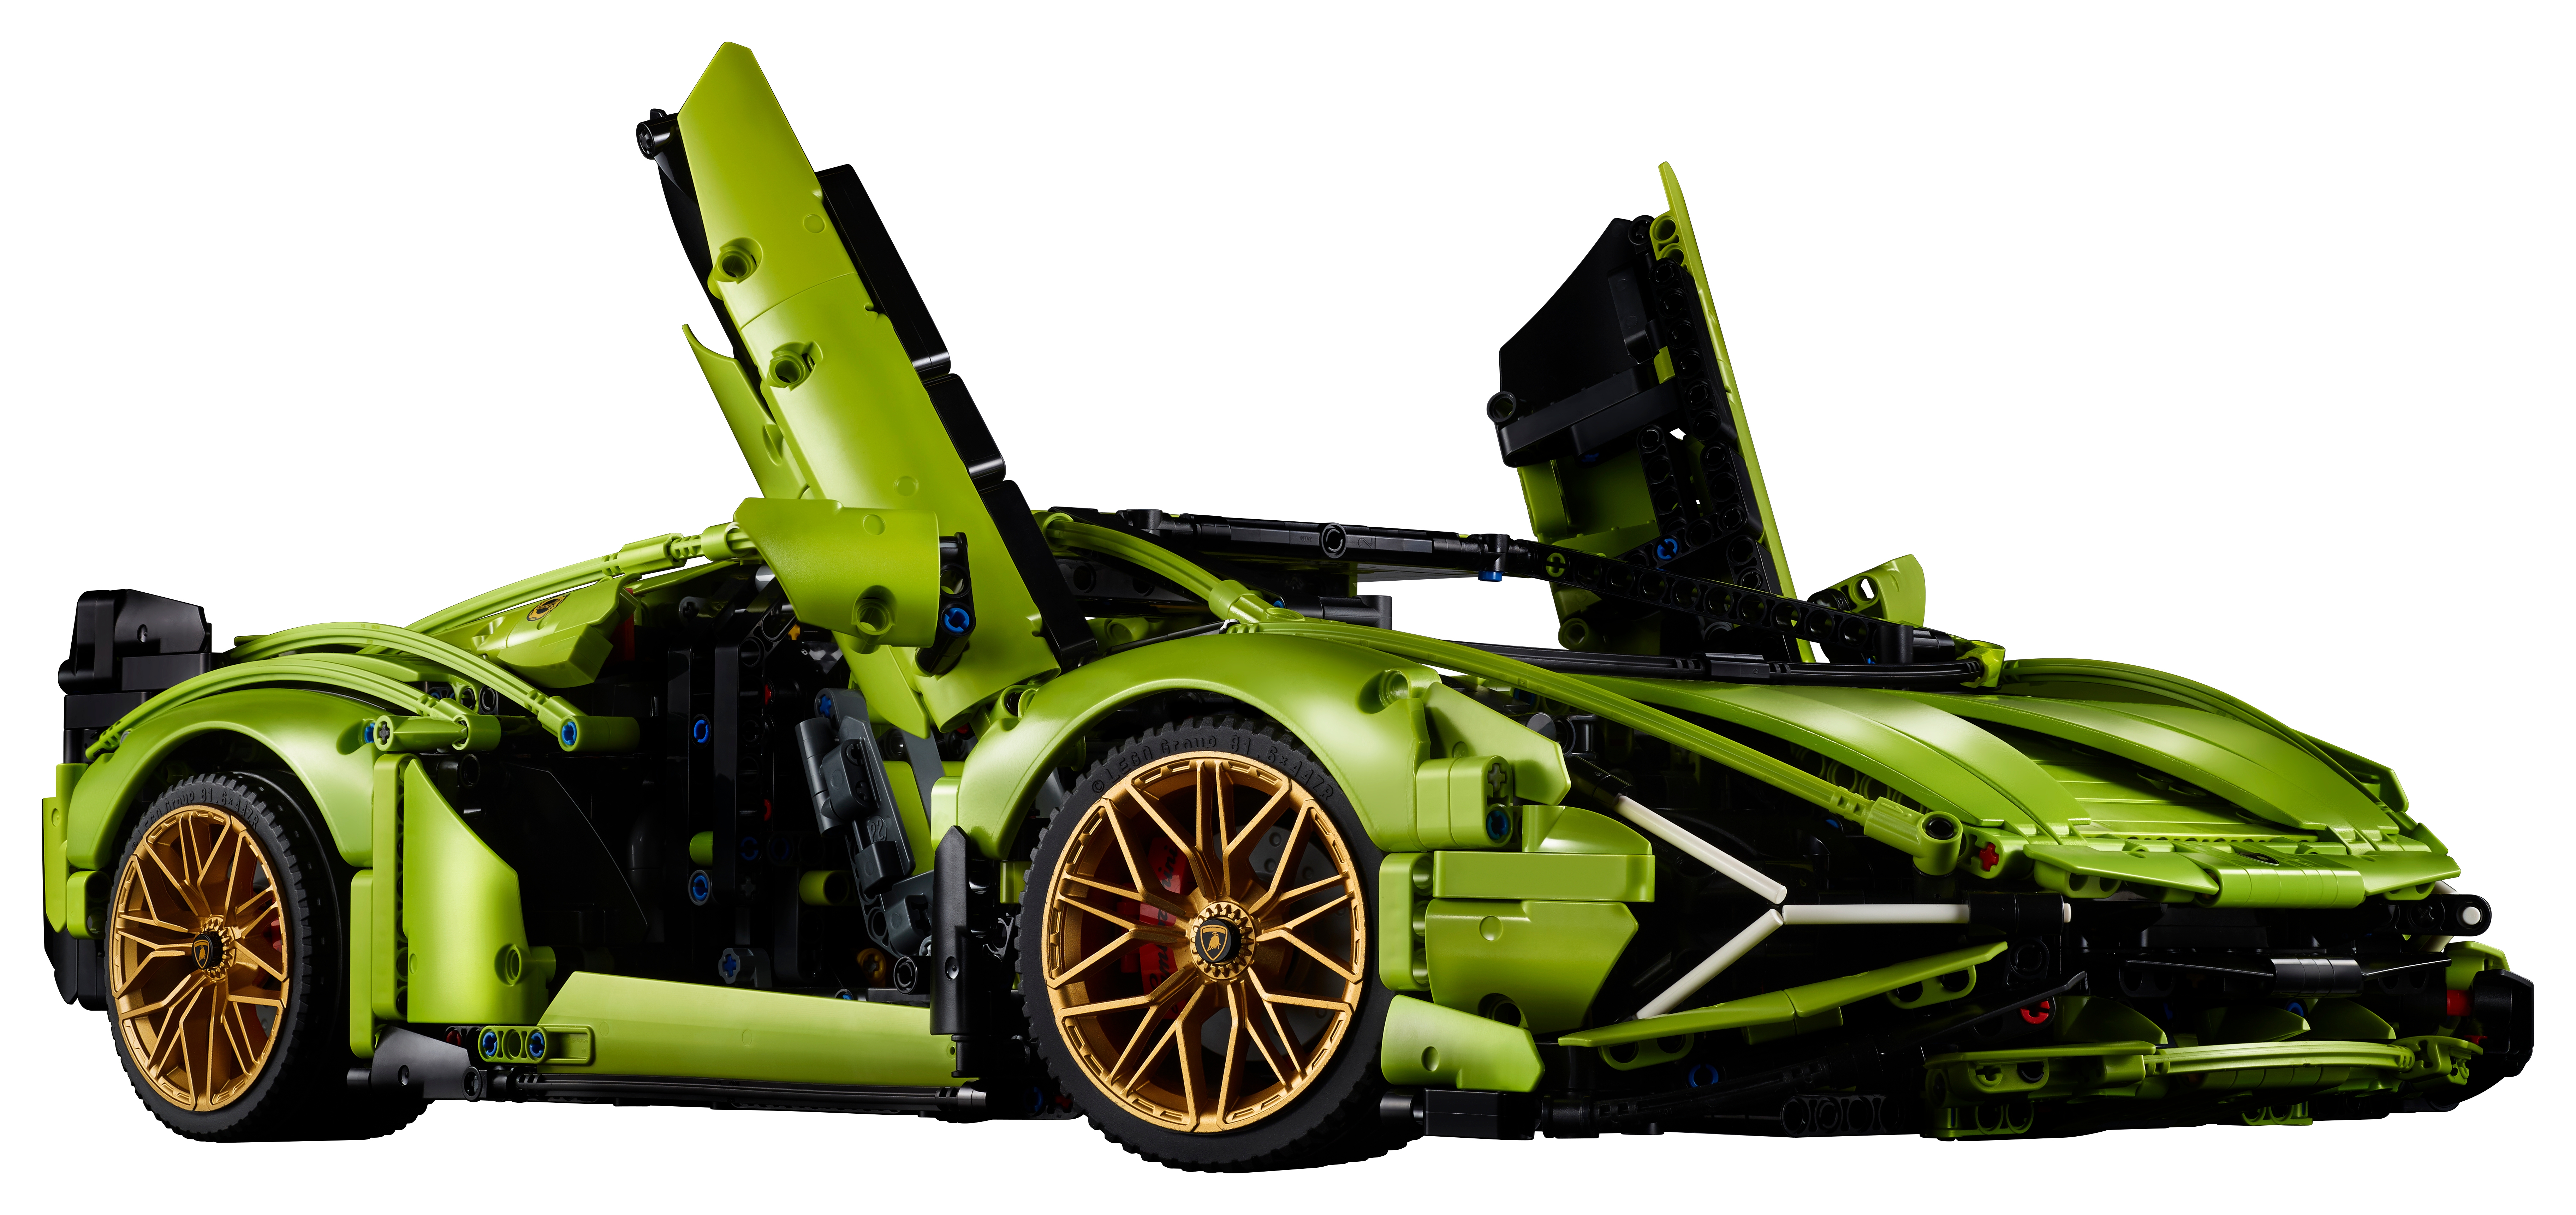 Automobili Lamborghini builds dream cars, also with LEGO® Technic™ −  Life−size Lamborghini Sián FKP 37 created from over 400,000 LEGO® elements